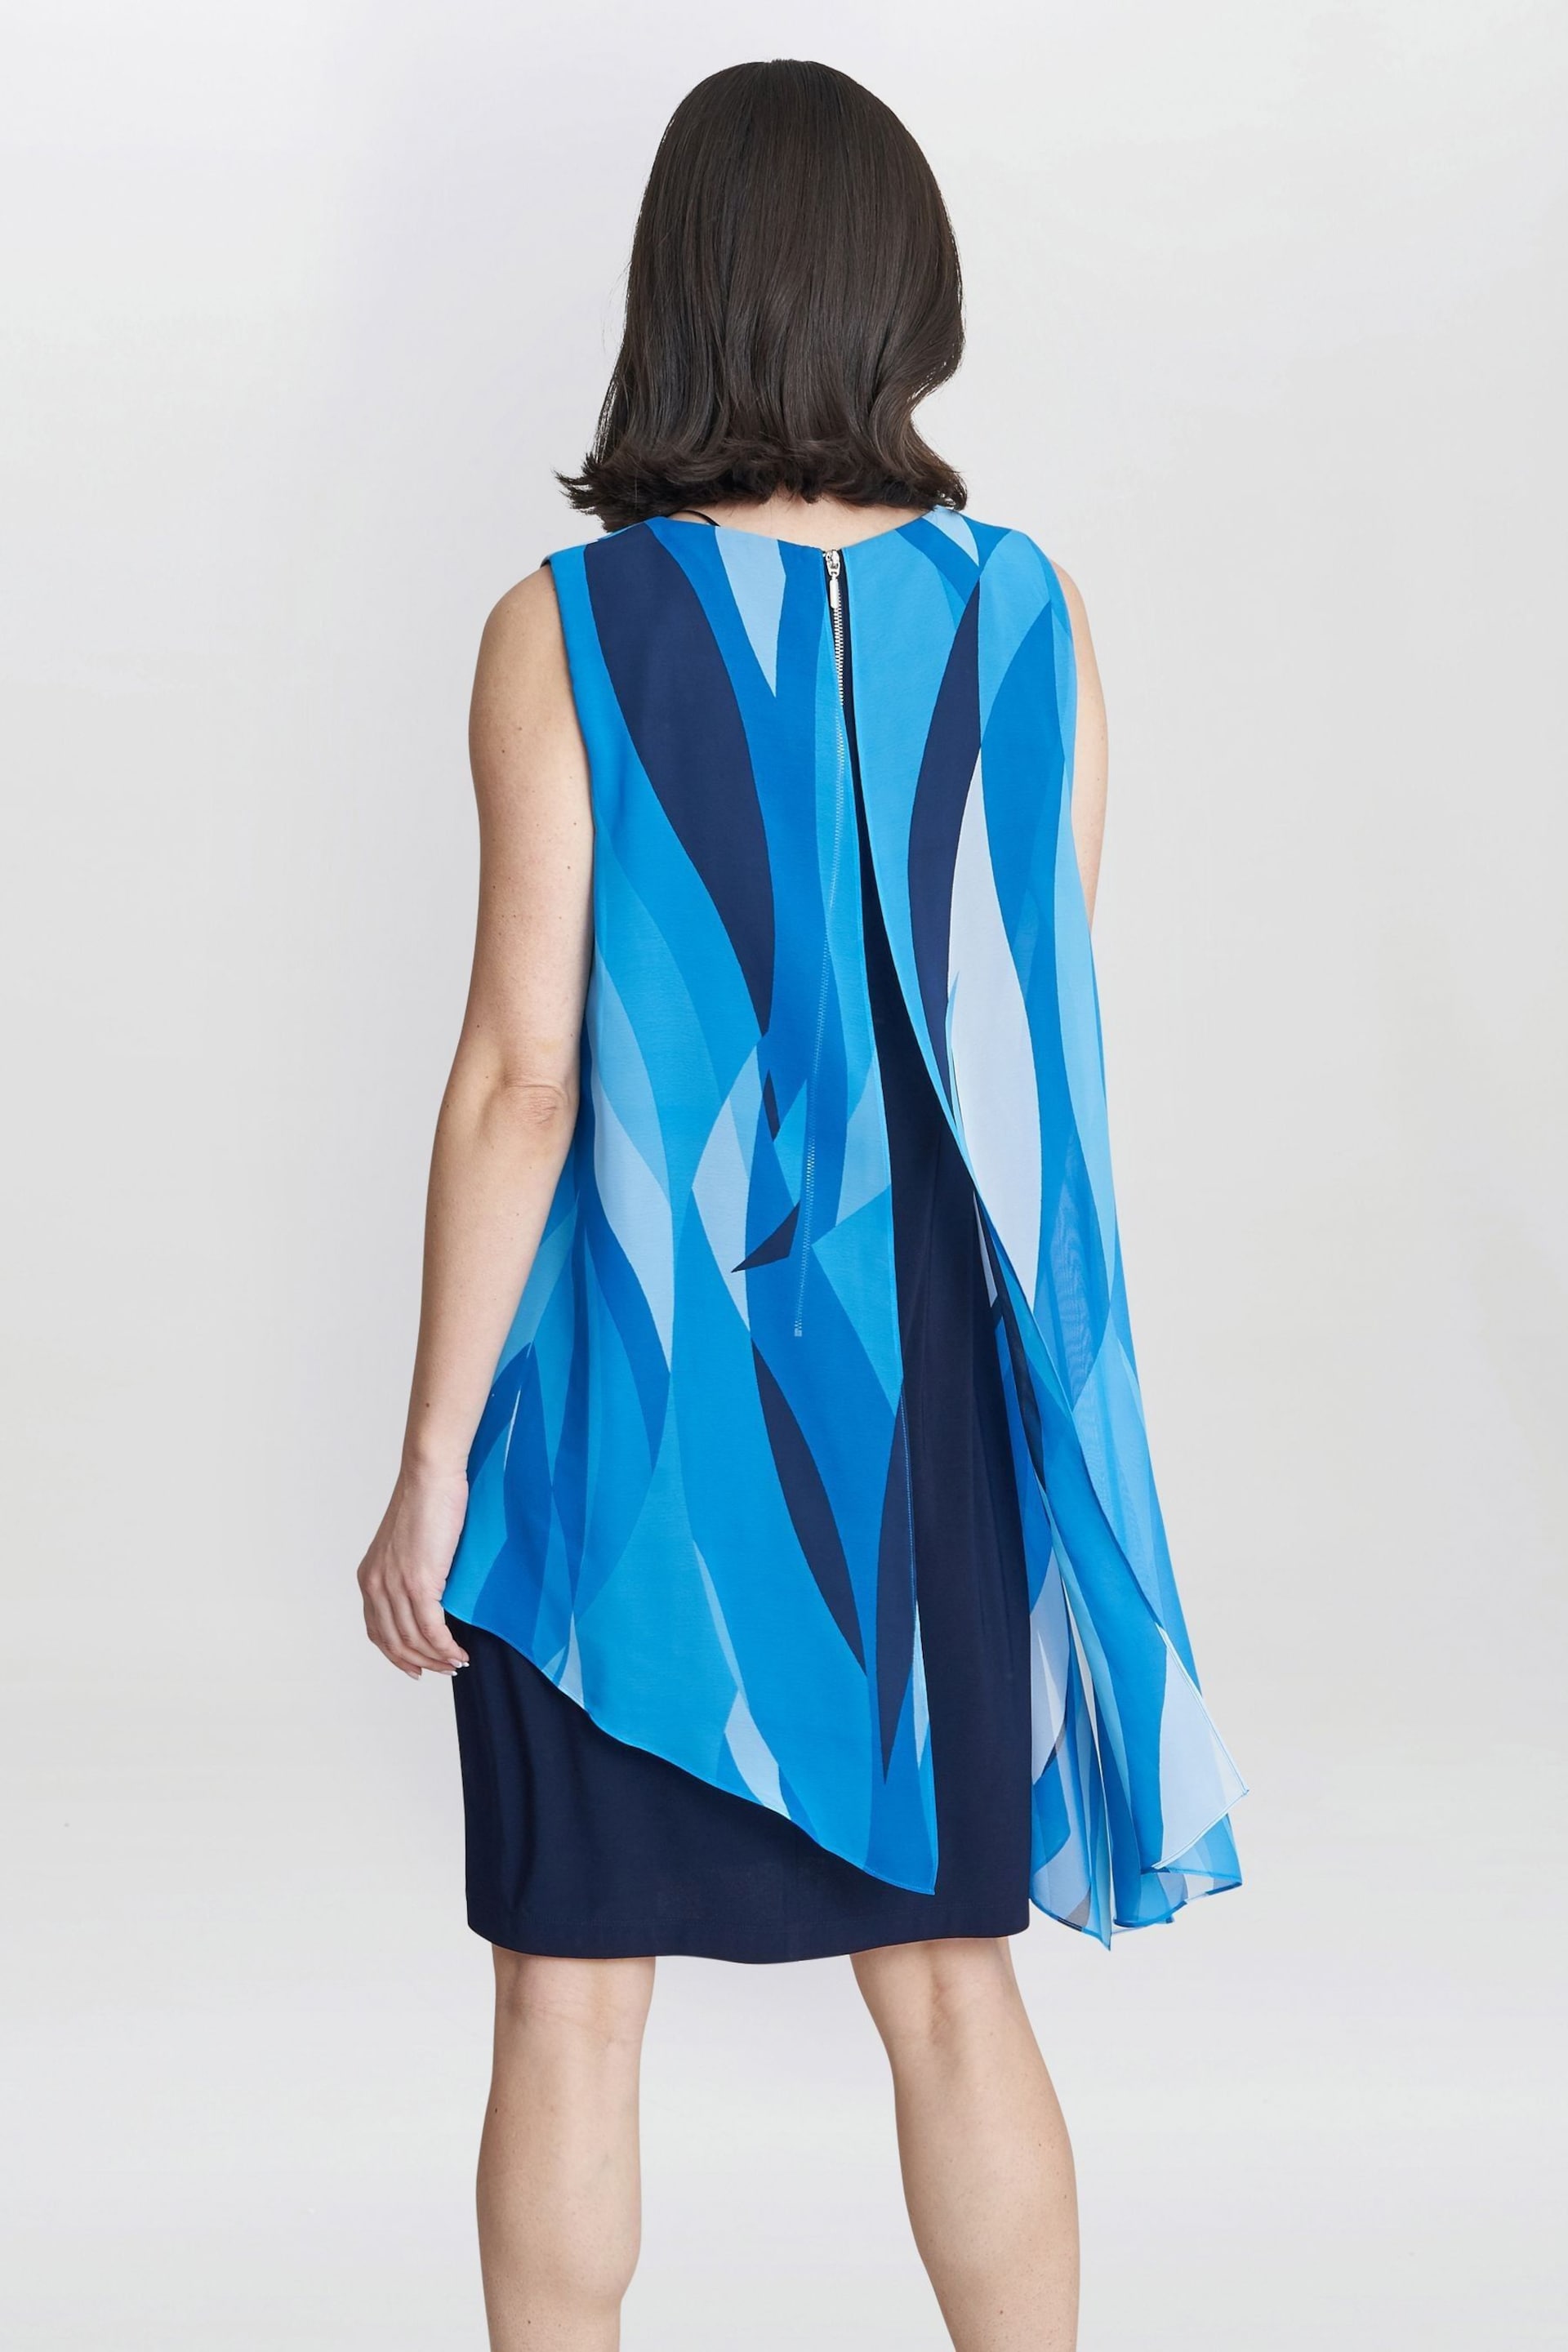 Gina Bacconi Blue Edie Short Printed Asymmetric Overlay Dress - Image 2 of 5